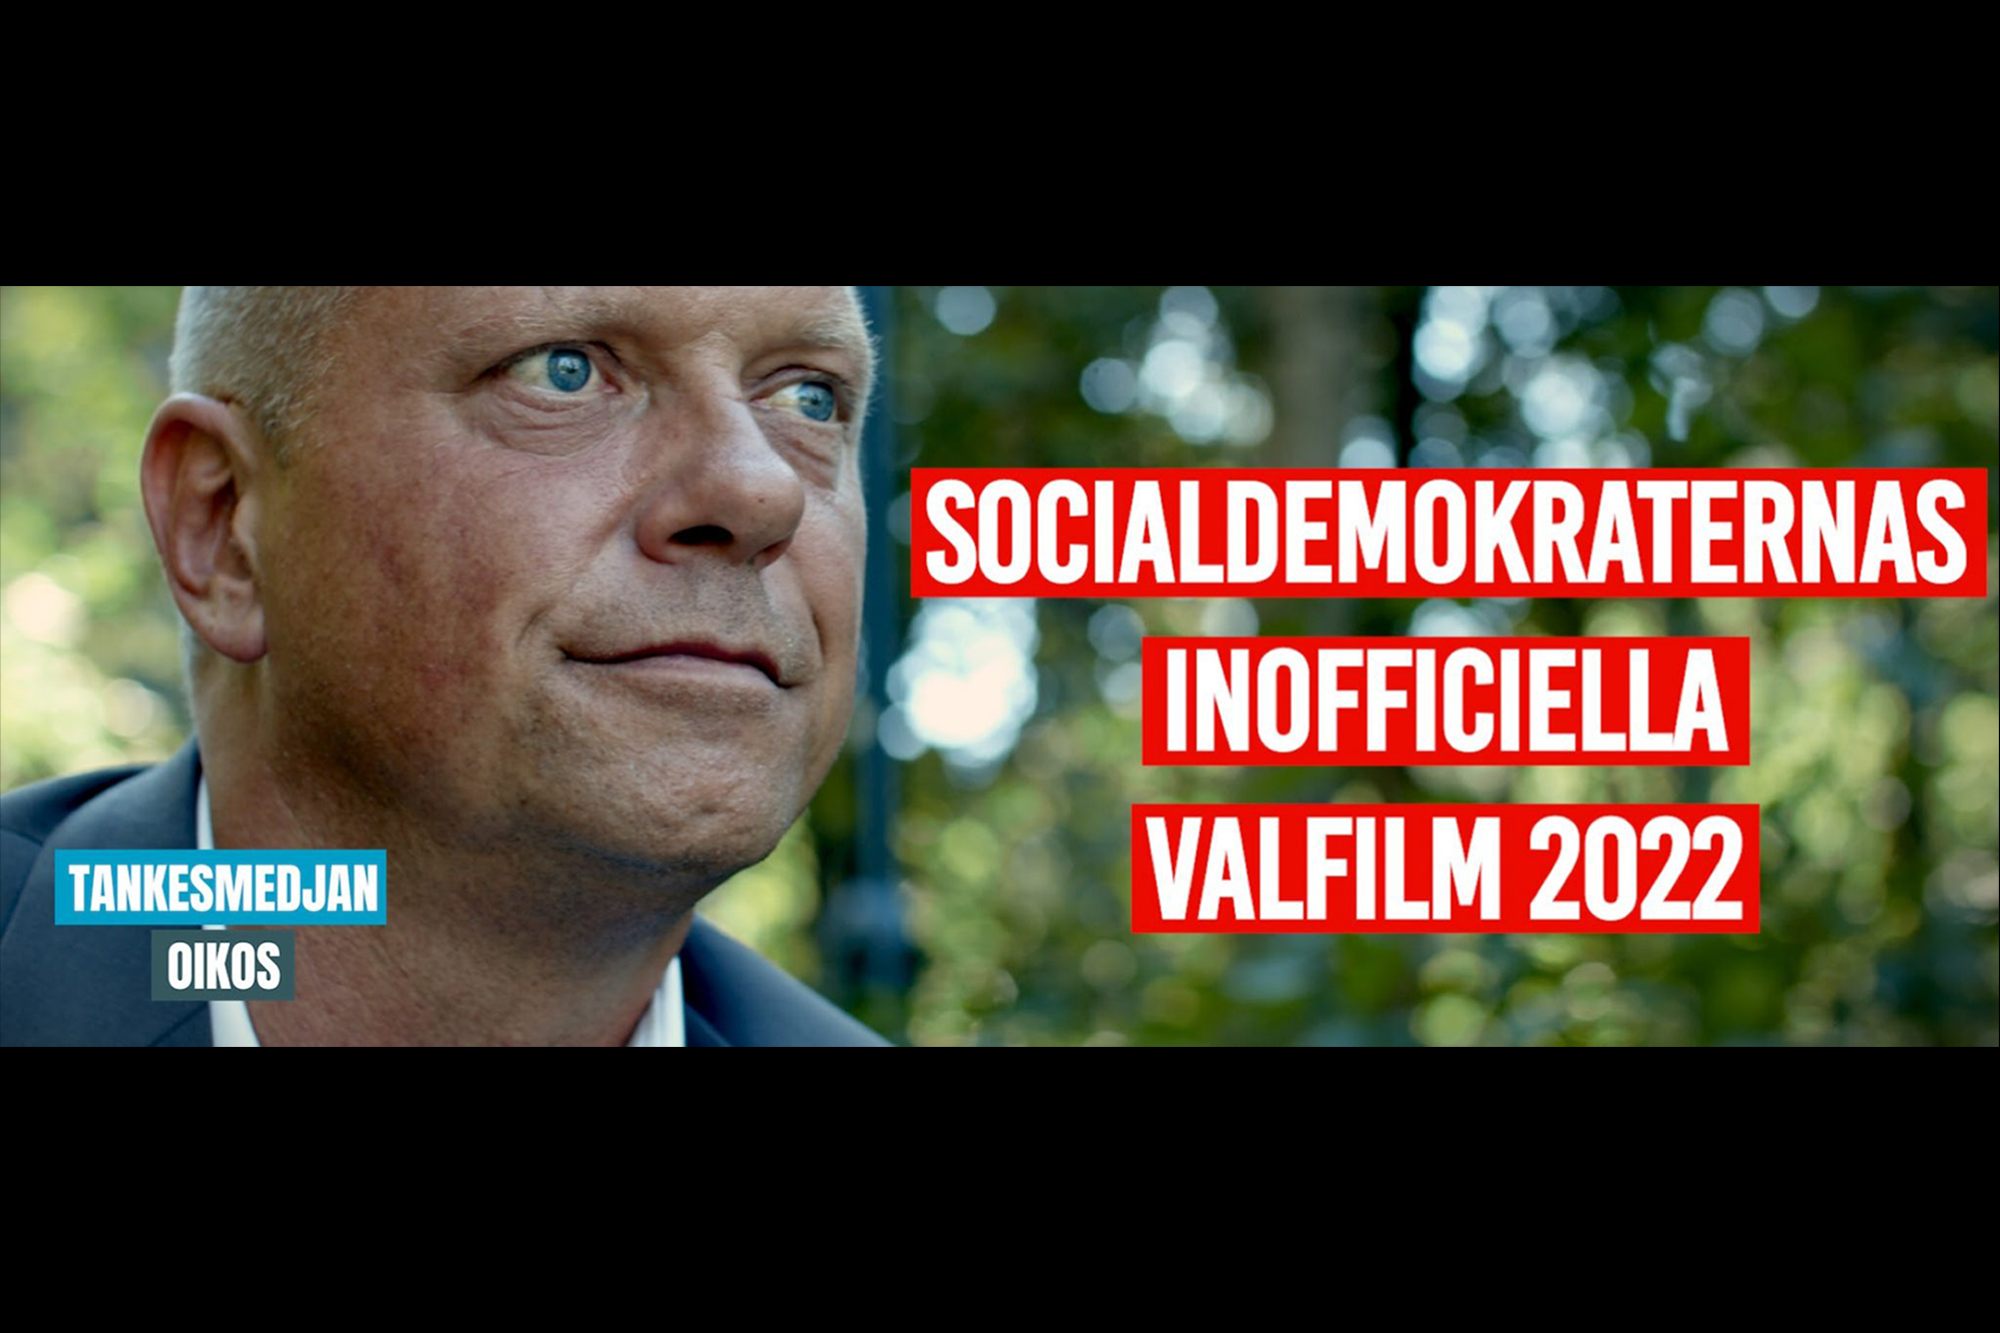 Socialdemokraterna video